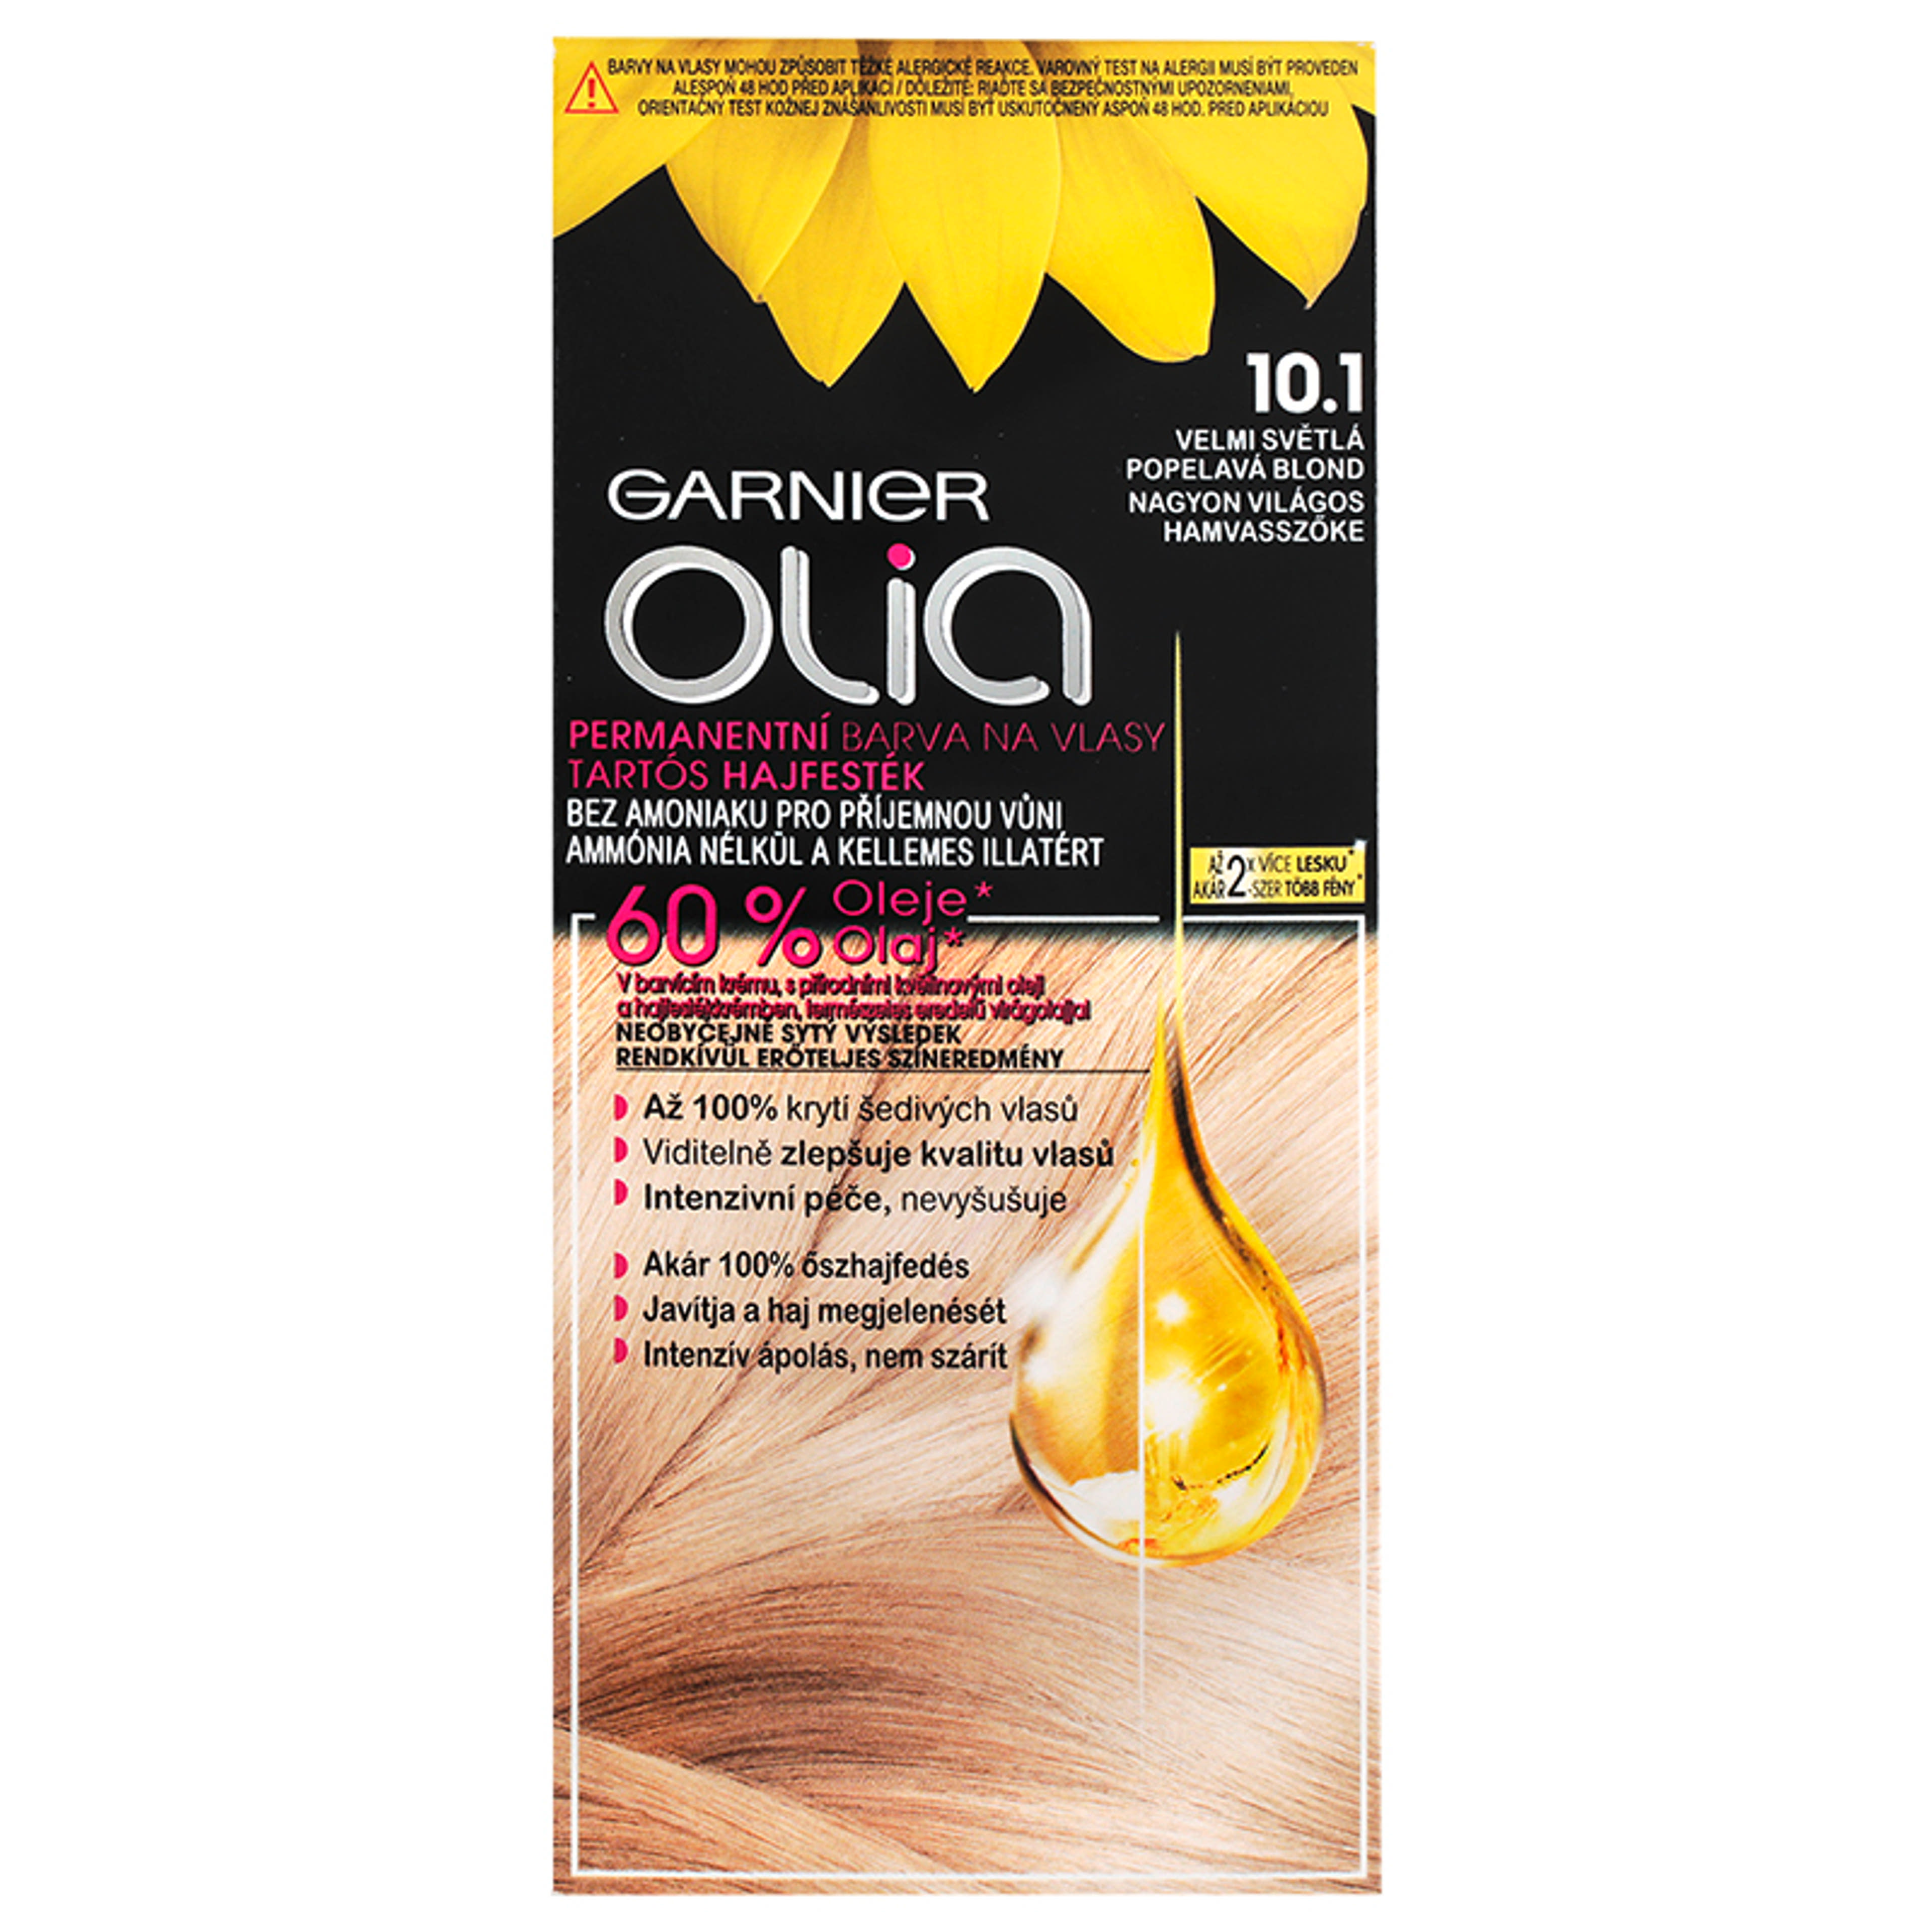 Garnier Olia tartós hajfesték 10.1 Nagyon világos hamvasszőke - 1 db-2